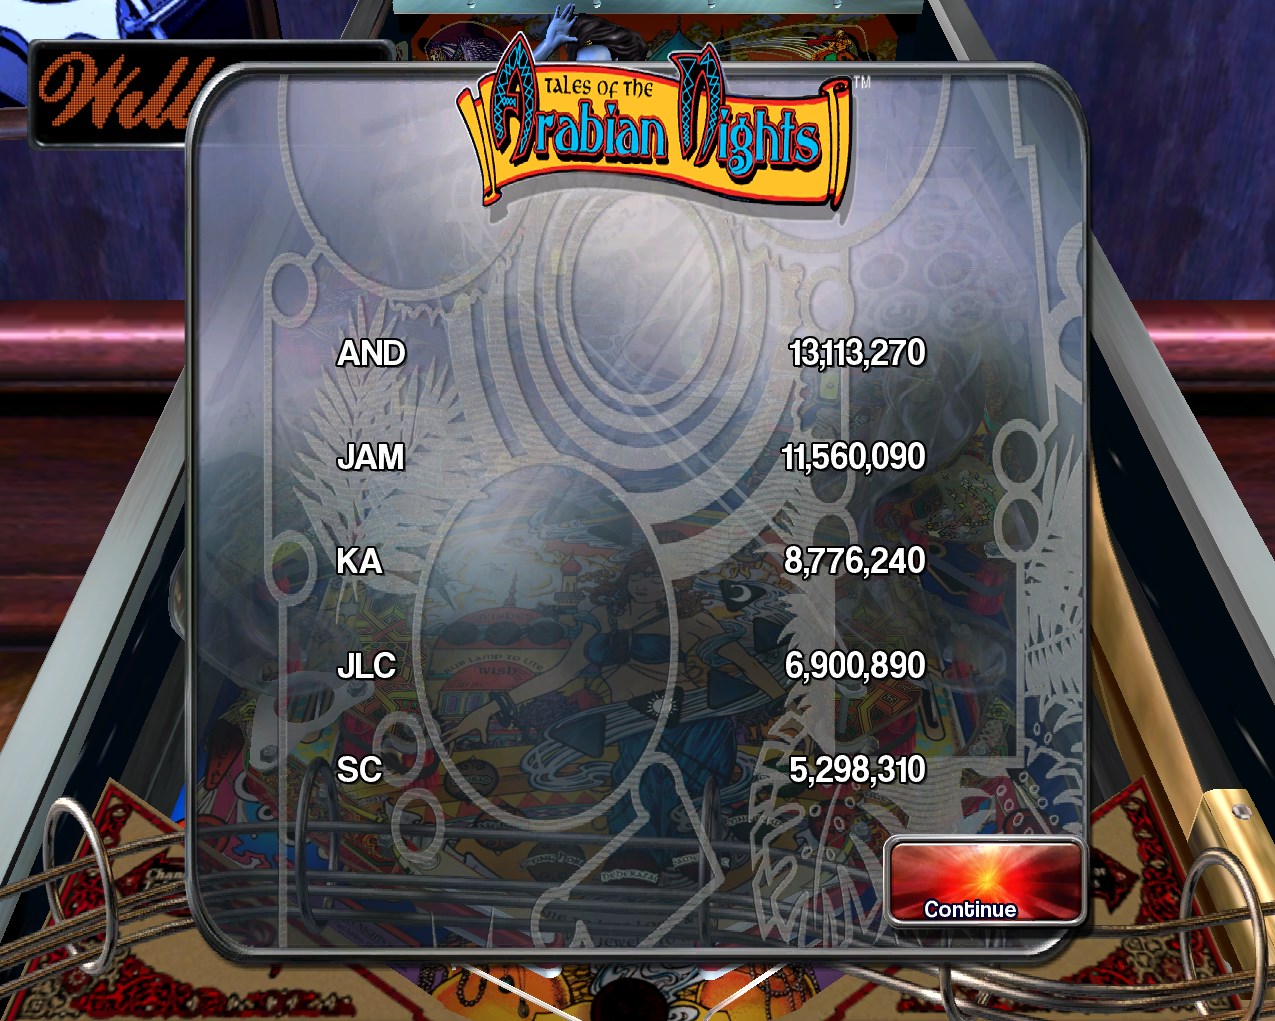 Pinball Arcade: Tales of the Arabian Nights [3 balls] 13,113,270 points